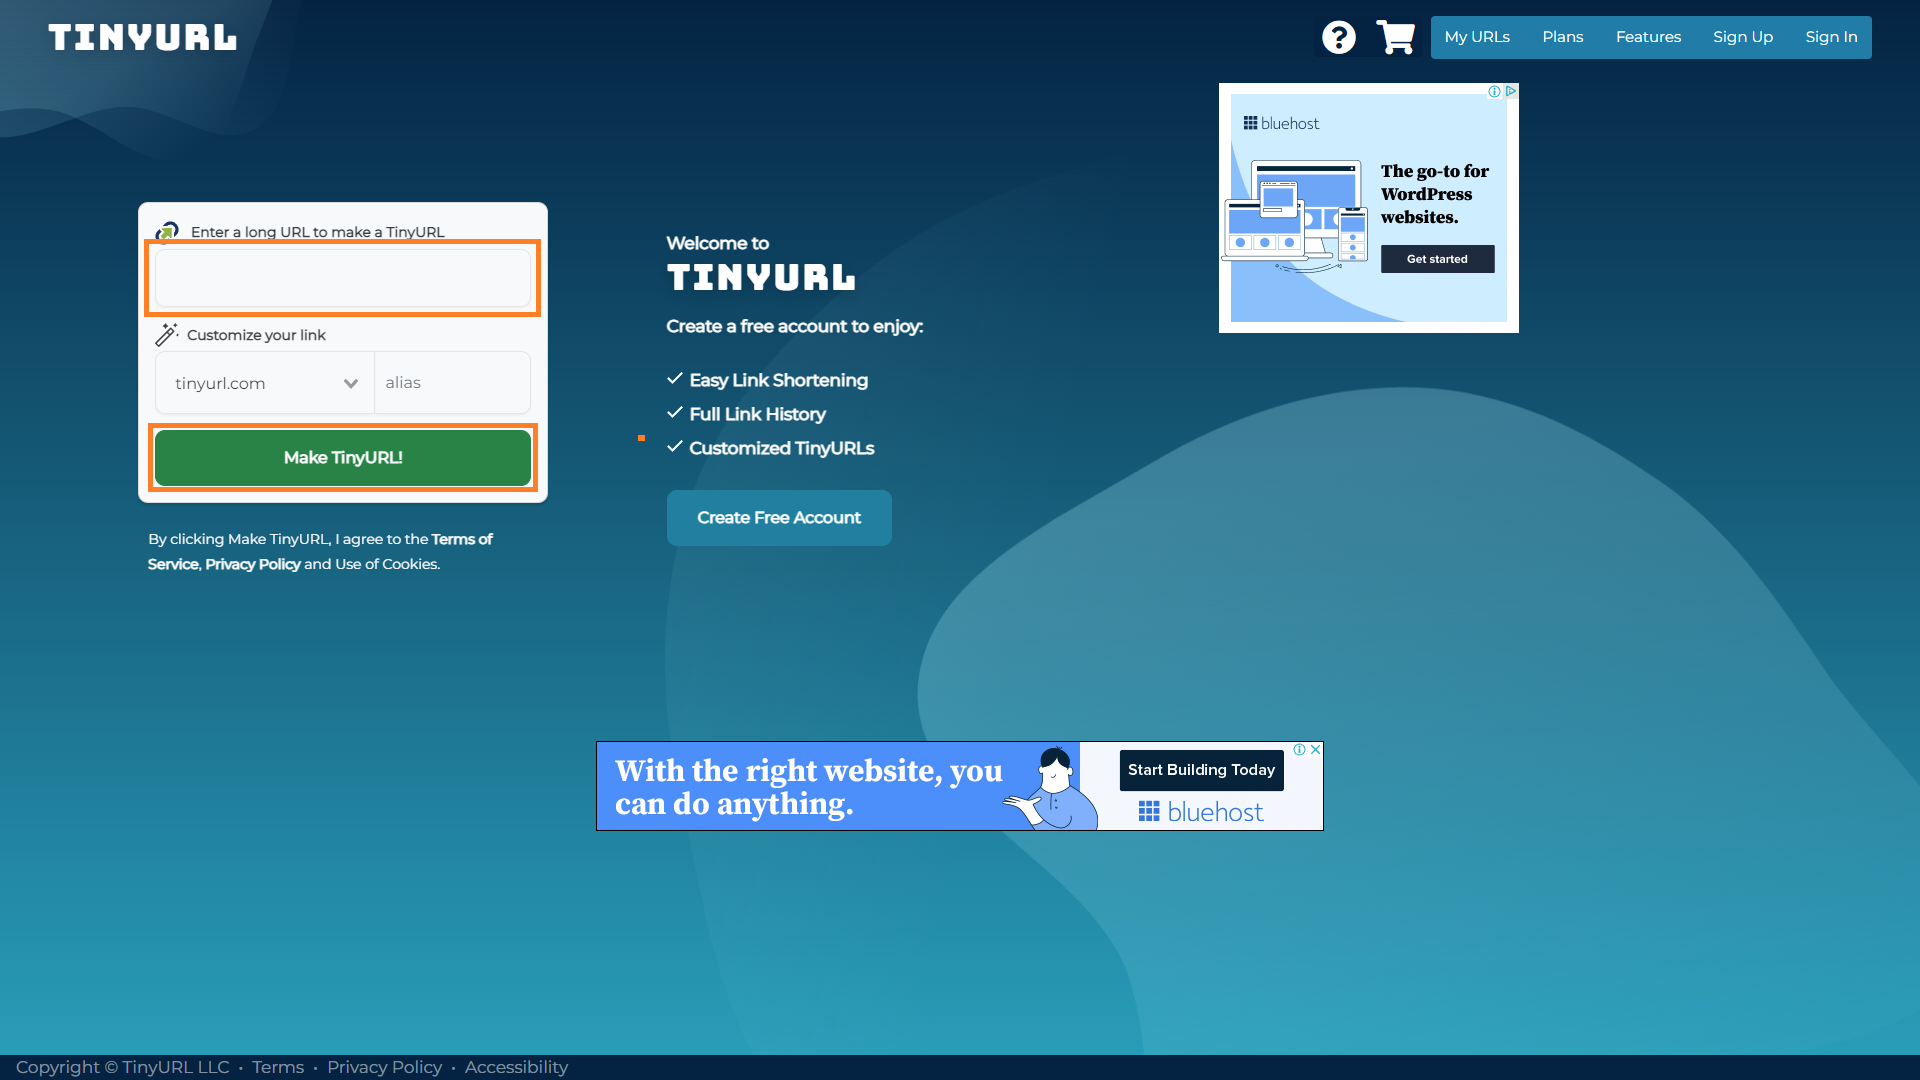 A screenshot of the TinyURL homepage